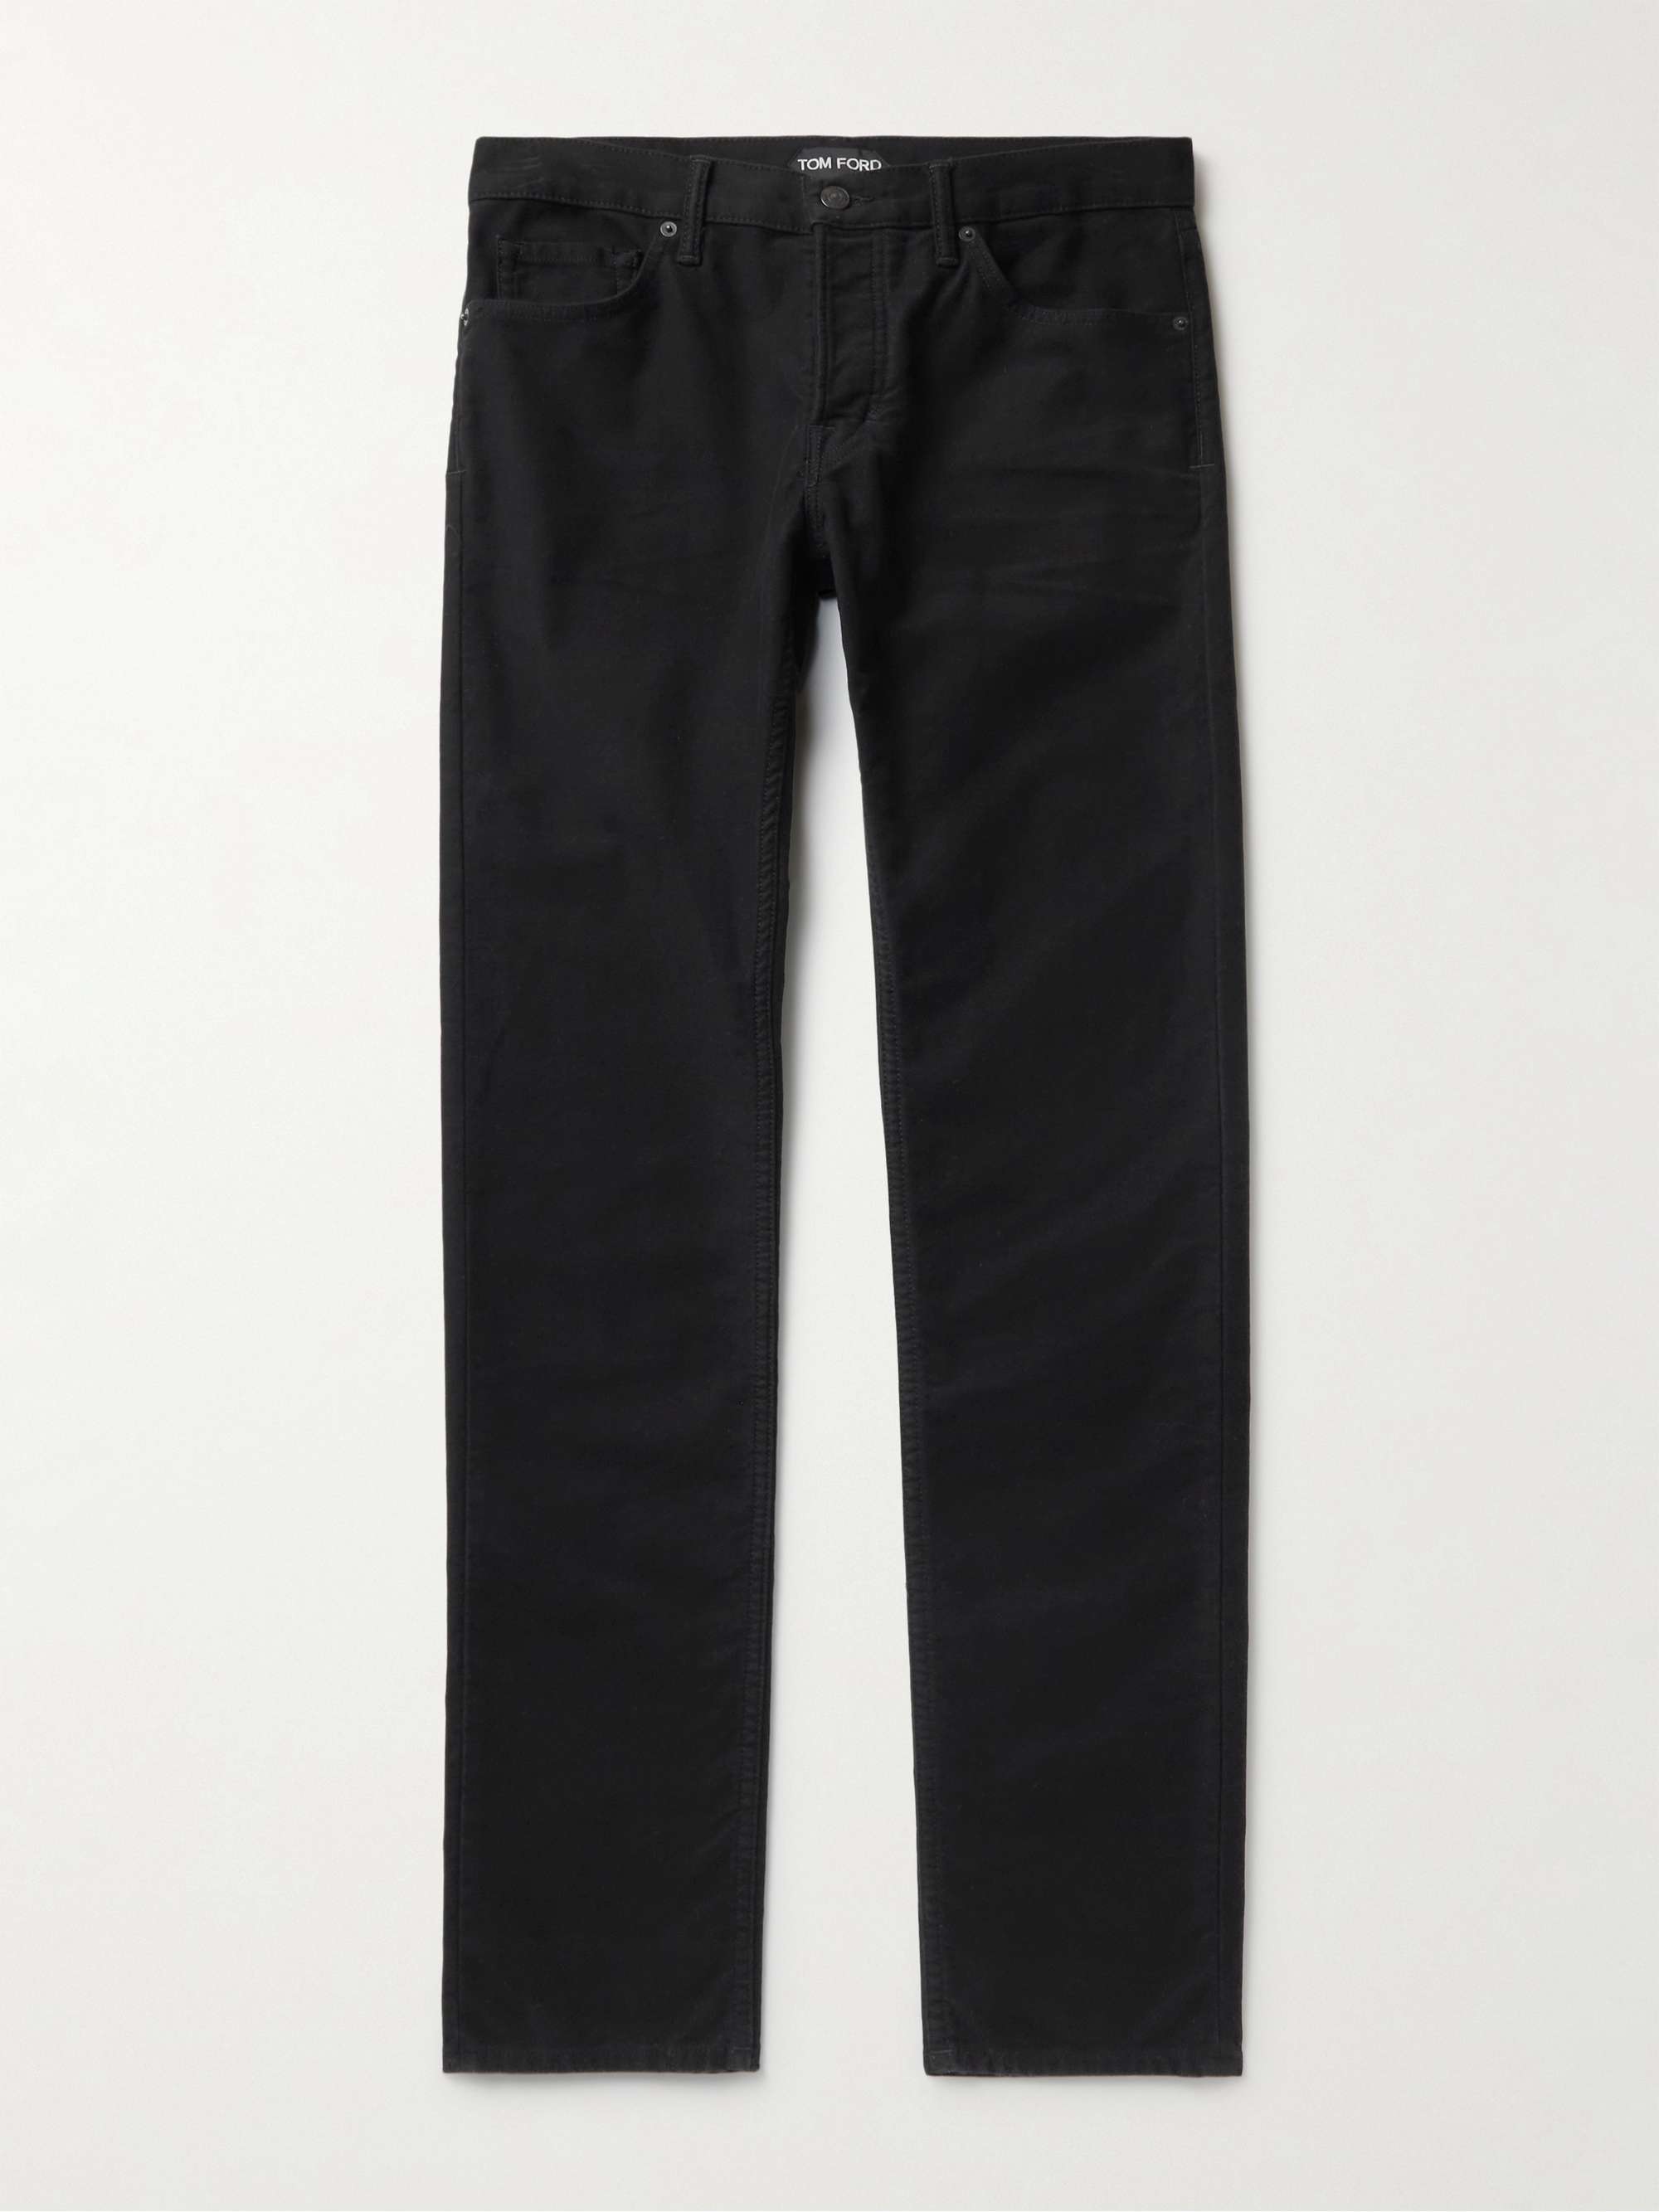 Tom Ford Denim Moleskin Slim-fit Jeans in Black for Men Mens Jeans Tom Ford Jeans 